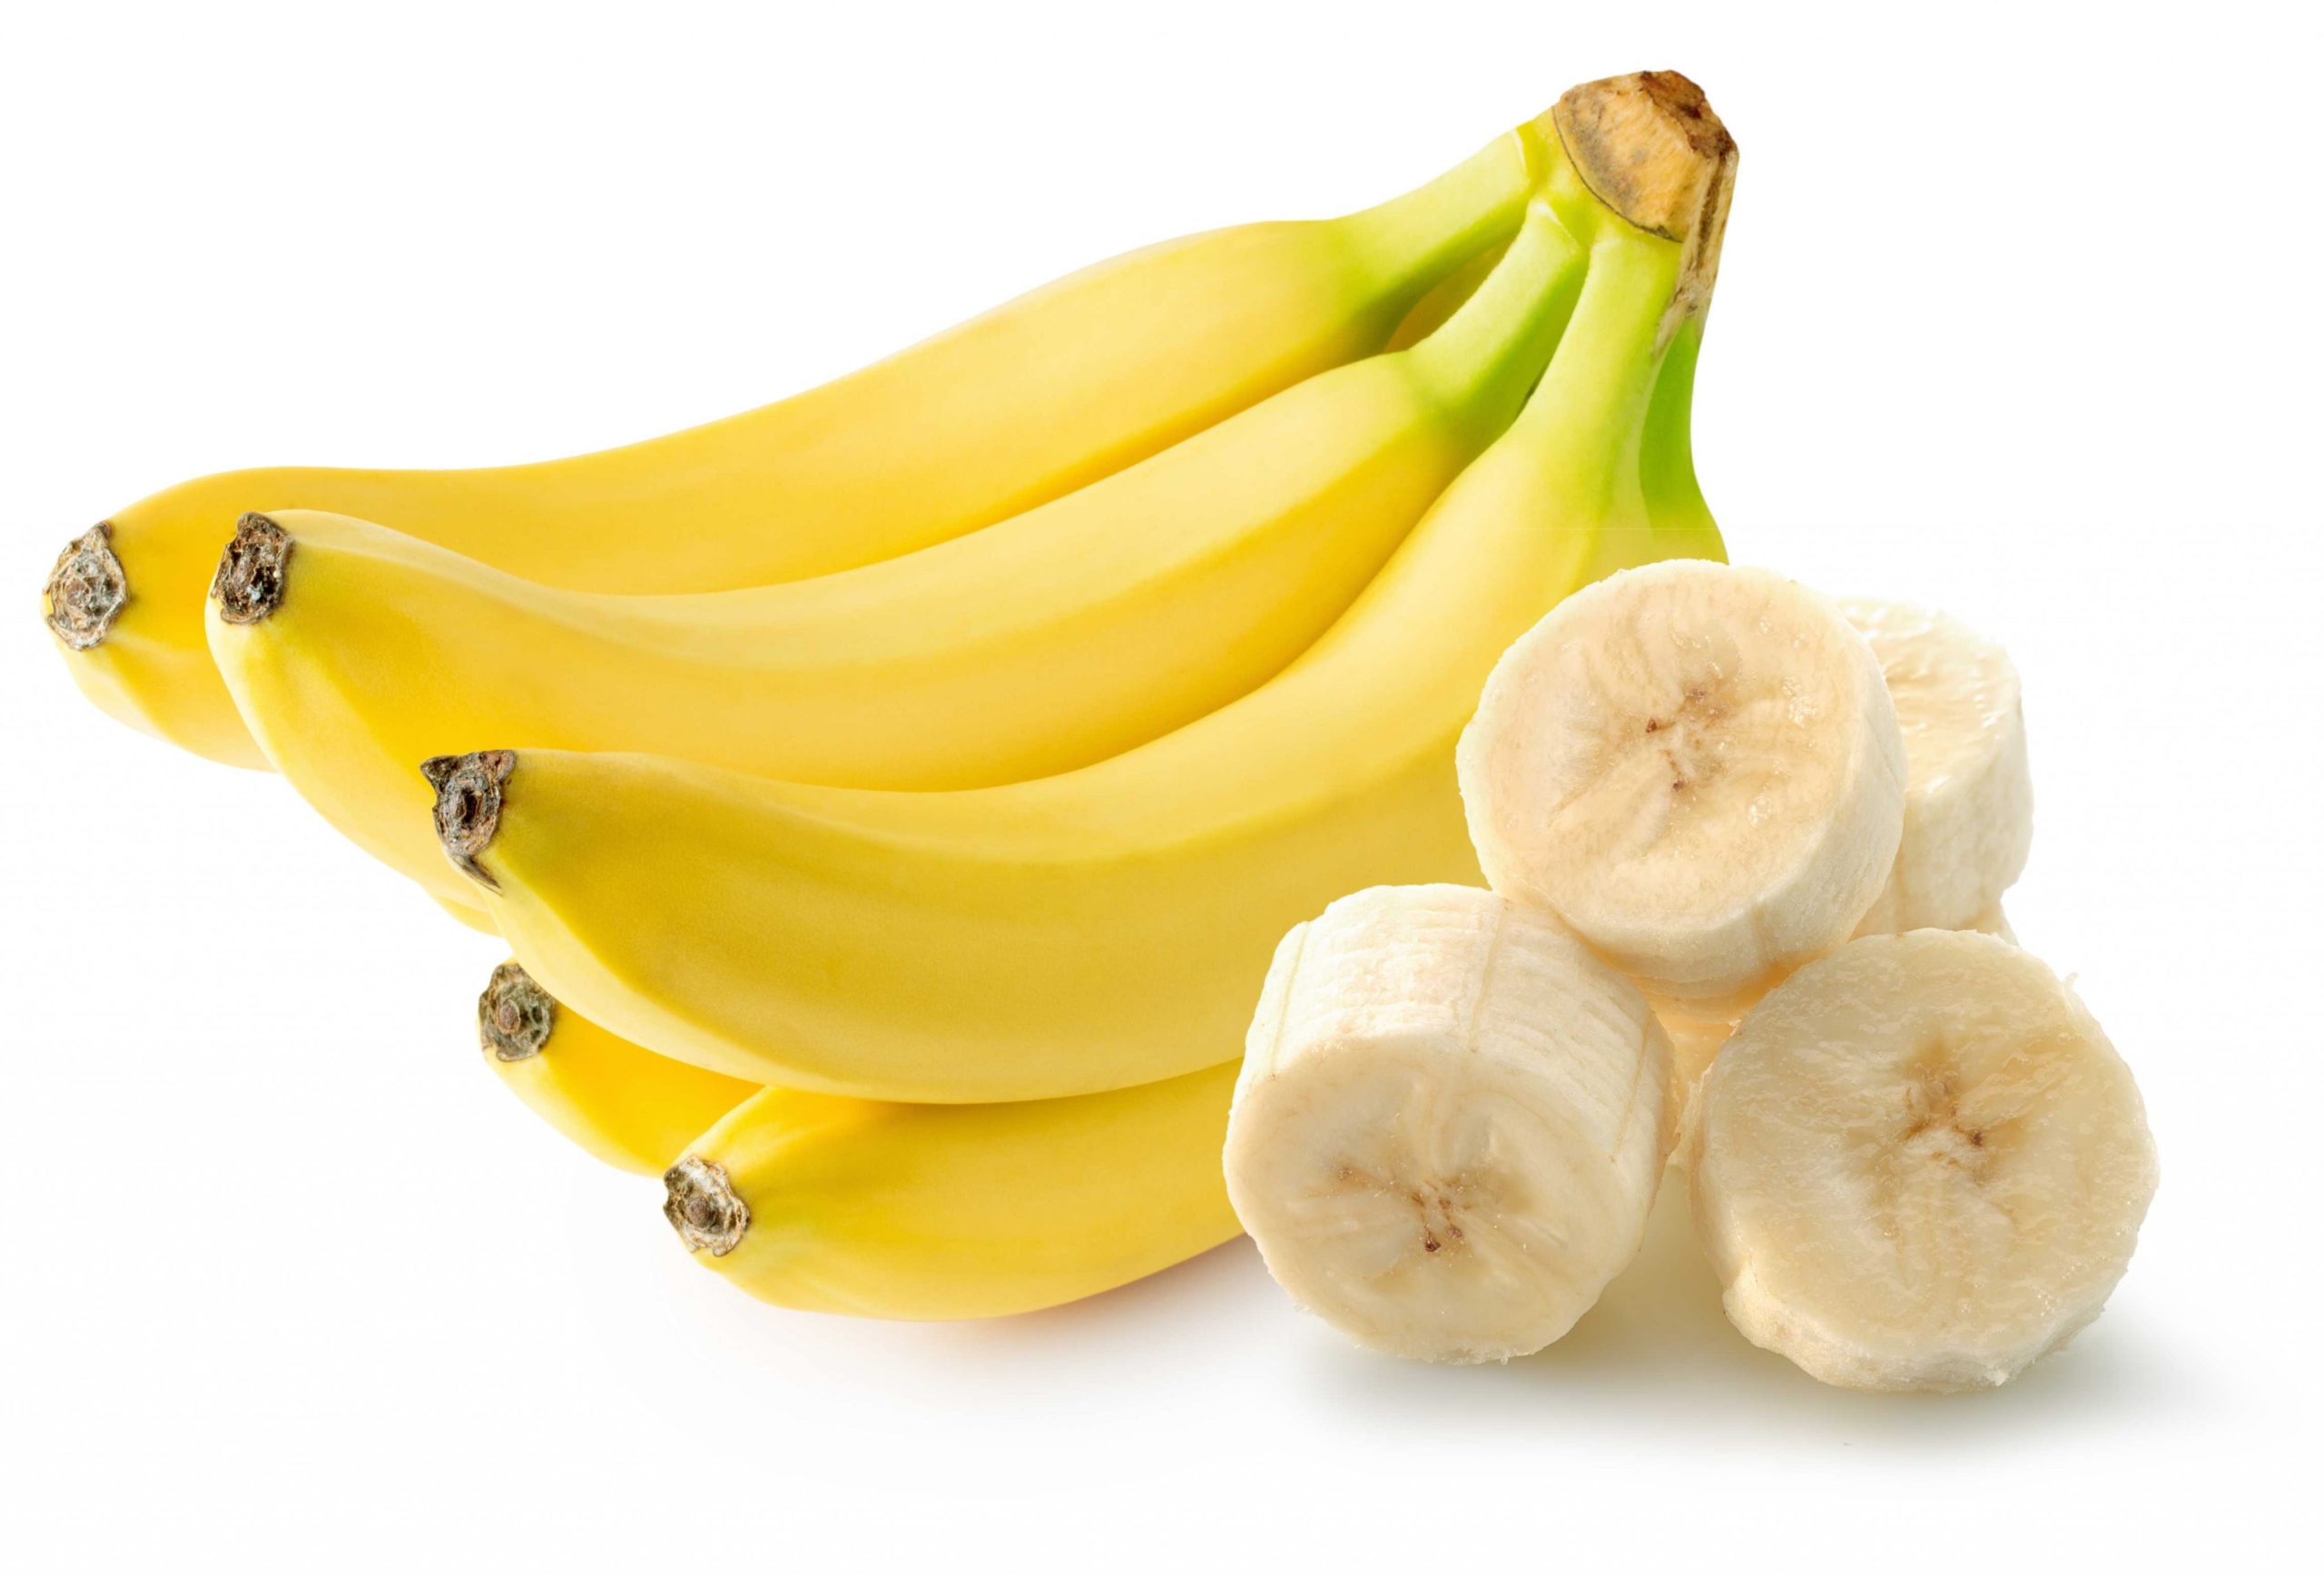 Comment se mange une banane verte ?